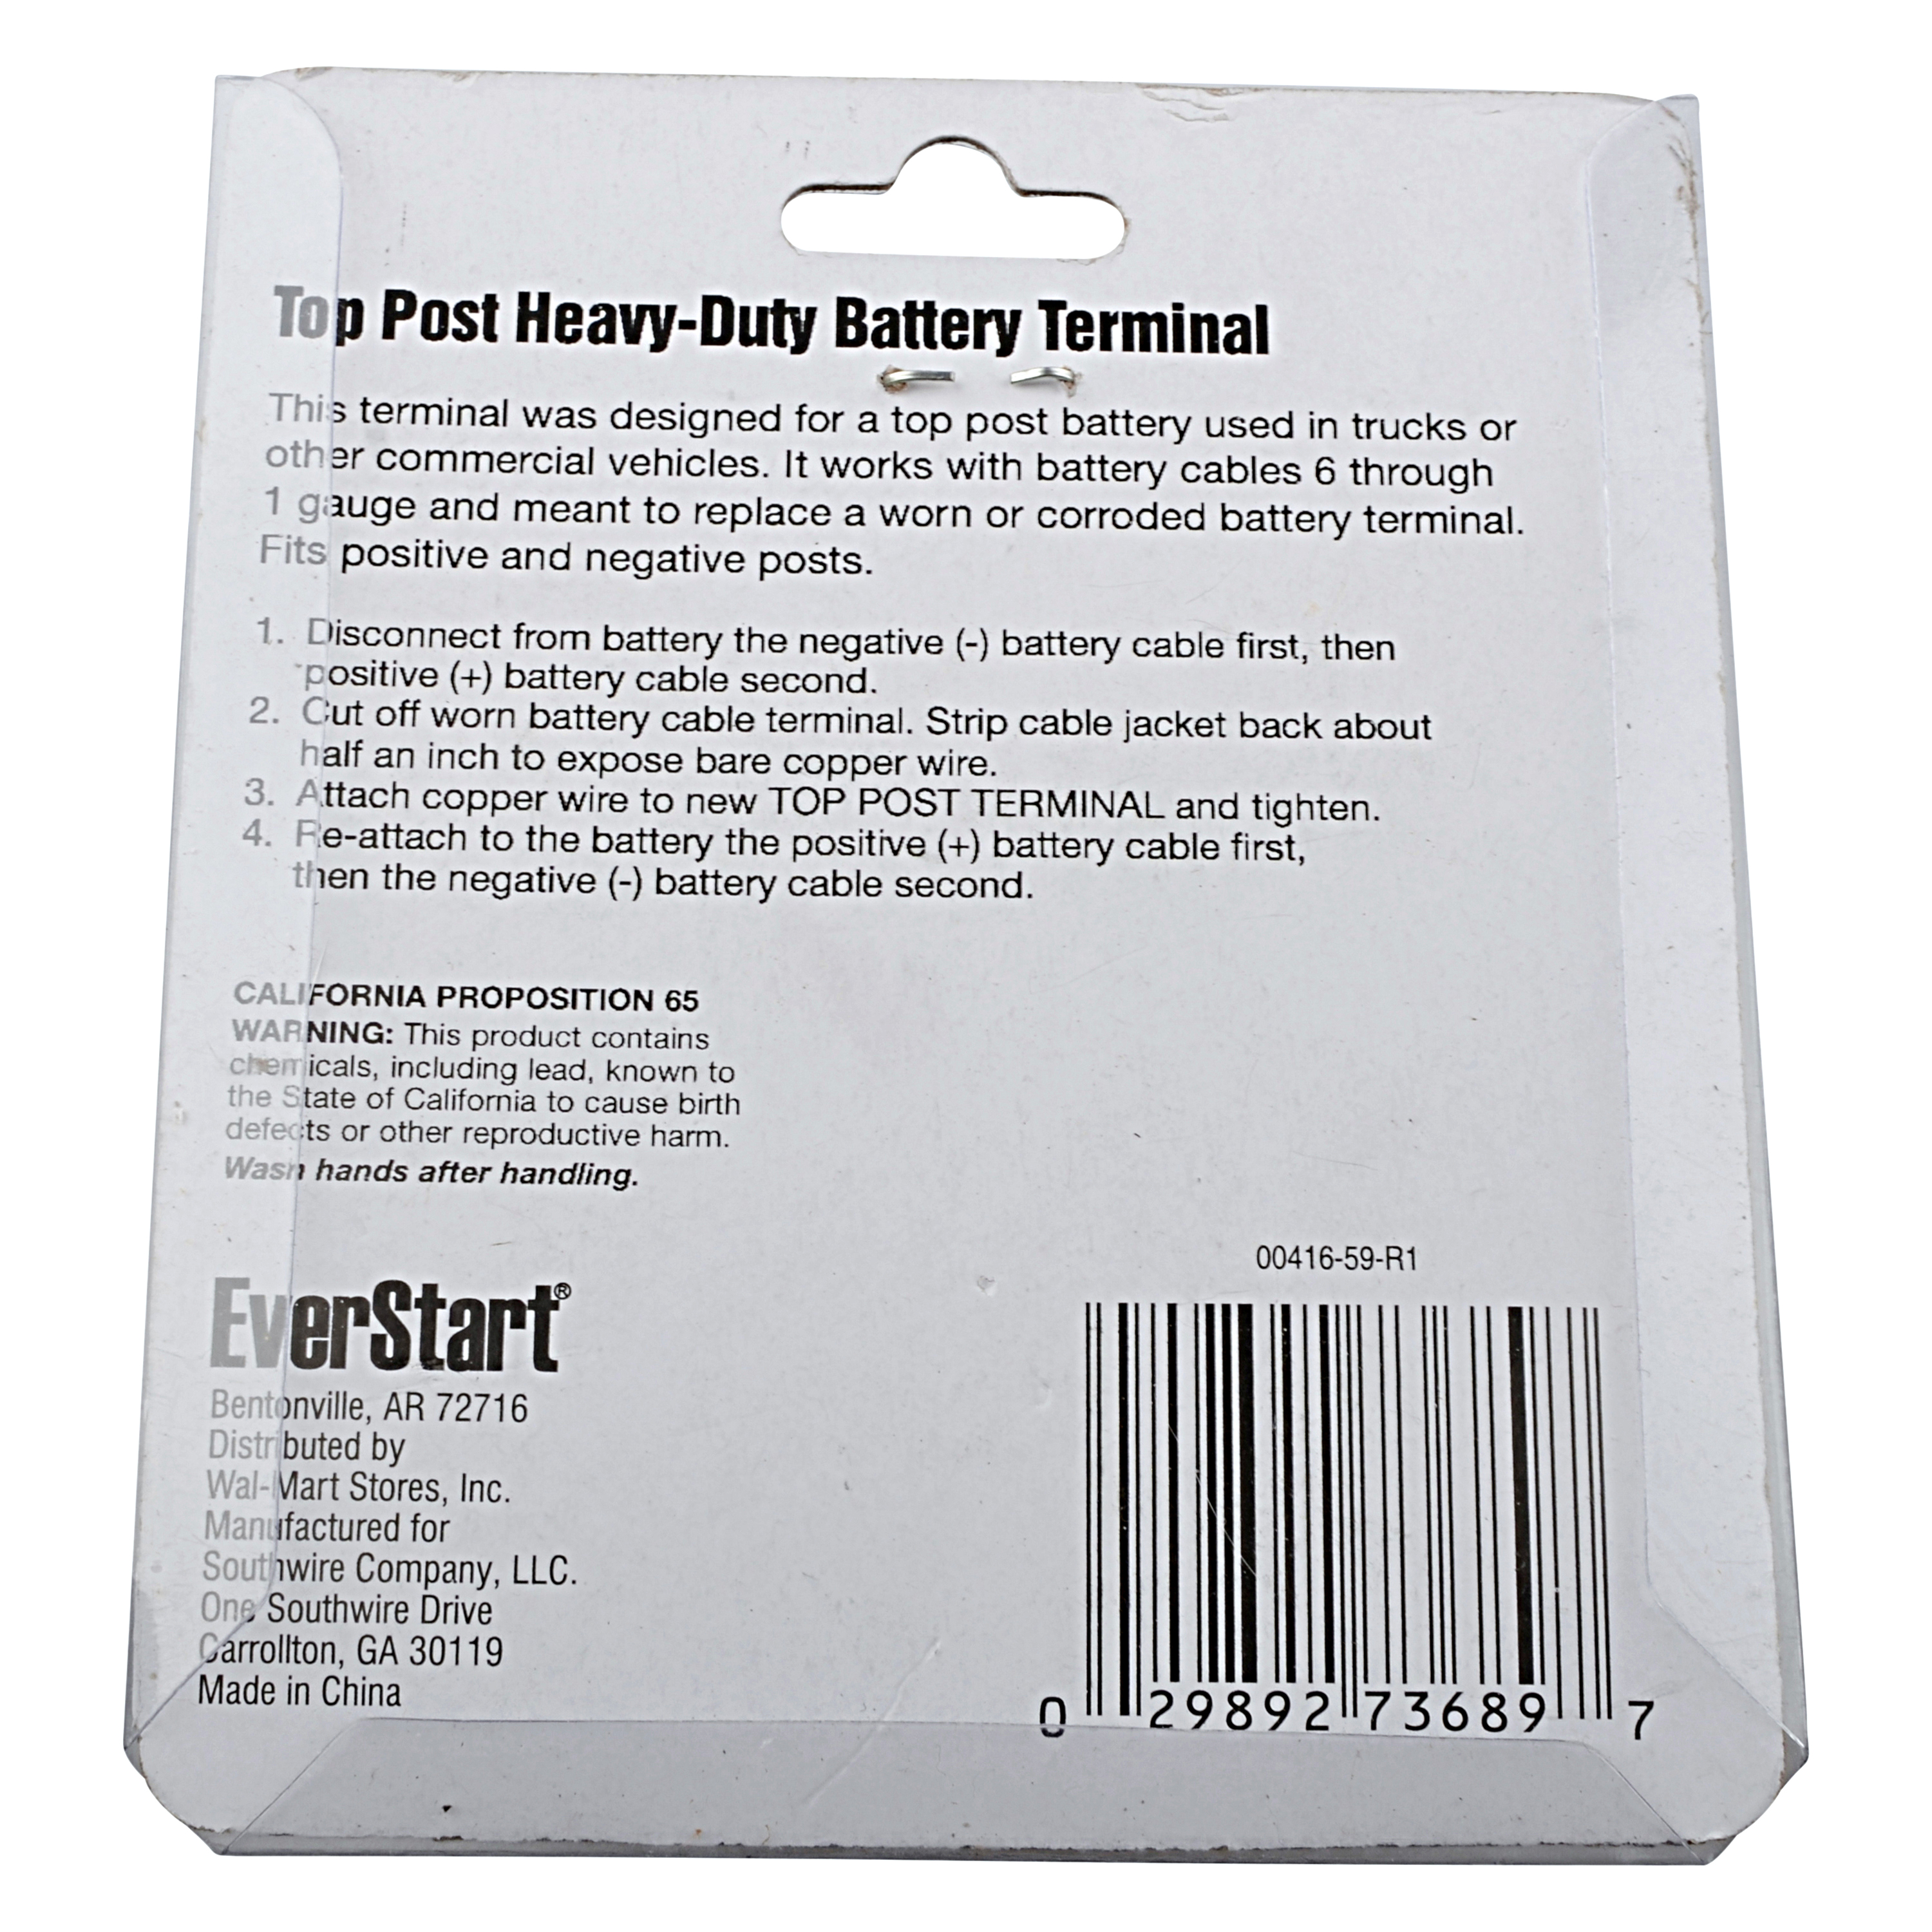 EverStart Top Post Heavy-Duty Battery Terminal - image 3 of 5